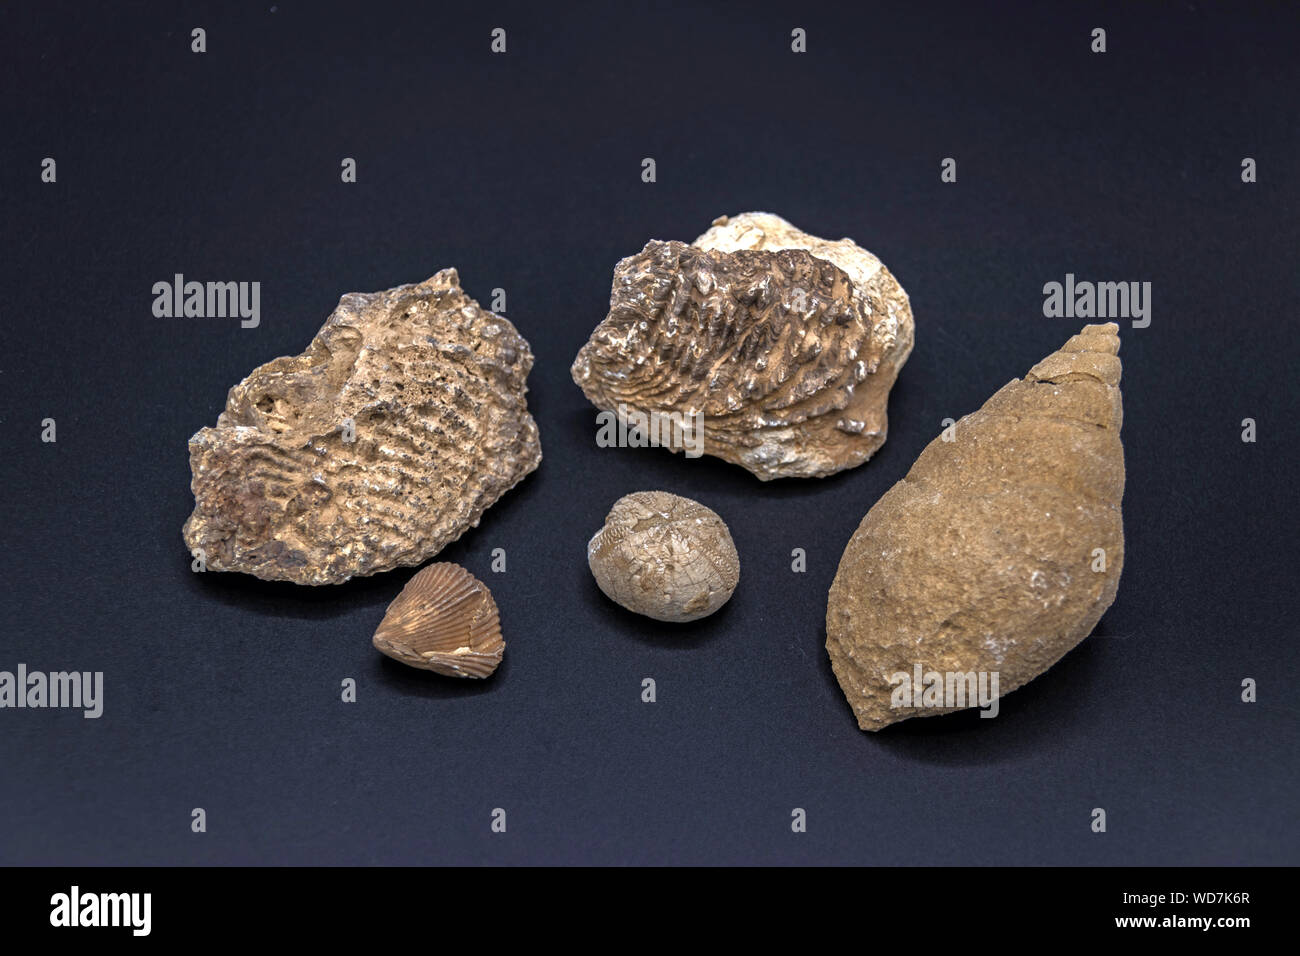 Fossil shells of sea mollusks and sea urchin (in the center) from Cenozoic sedimentary rocks of Saudi Arabia Stock Photo